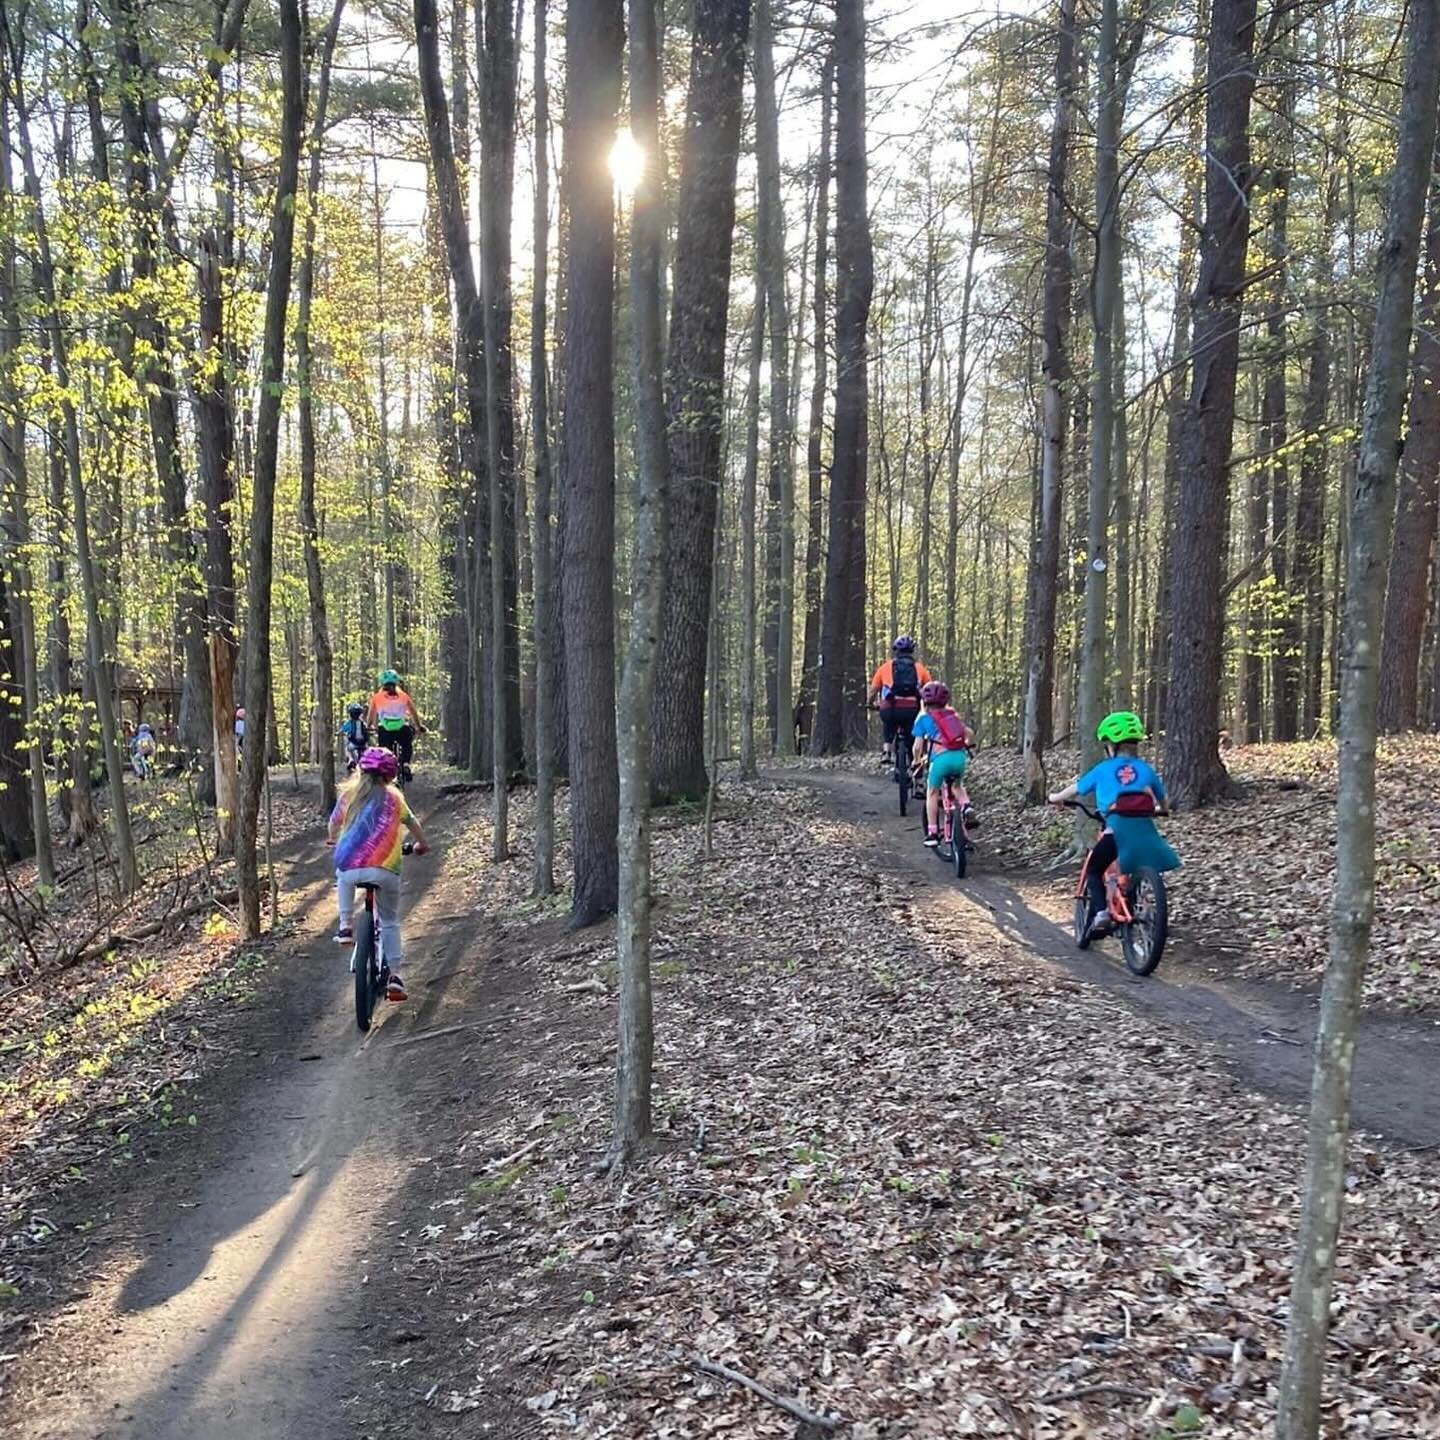 Shredders enjoying Luther Forest trails during Week 2!